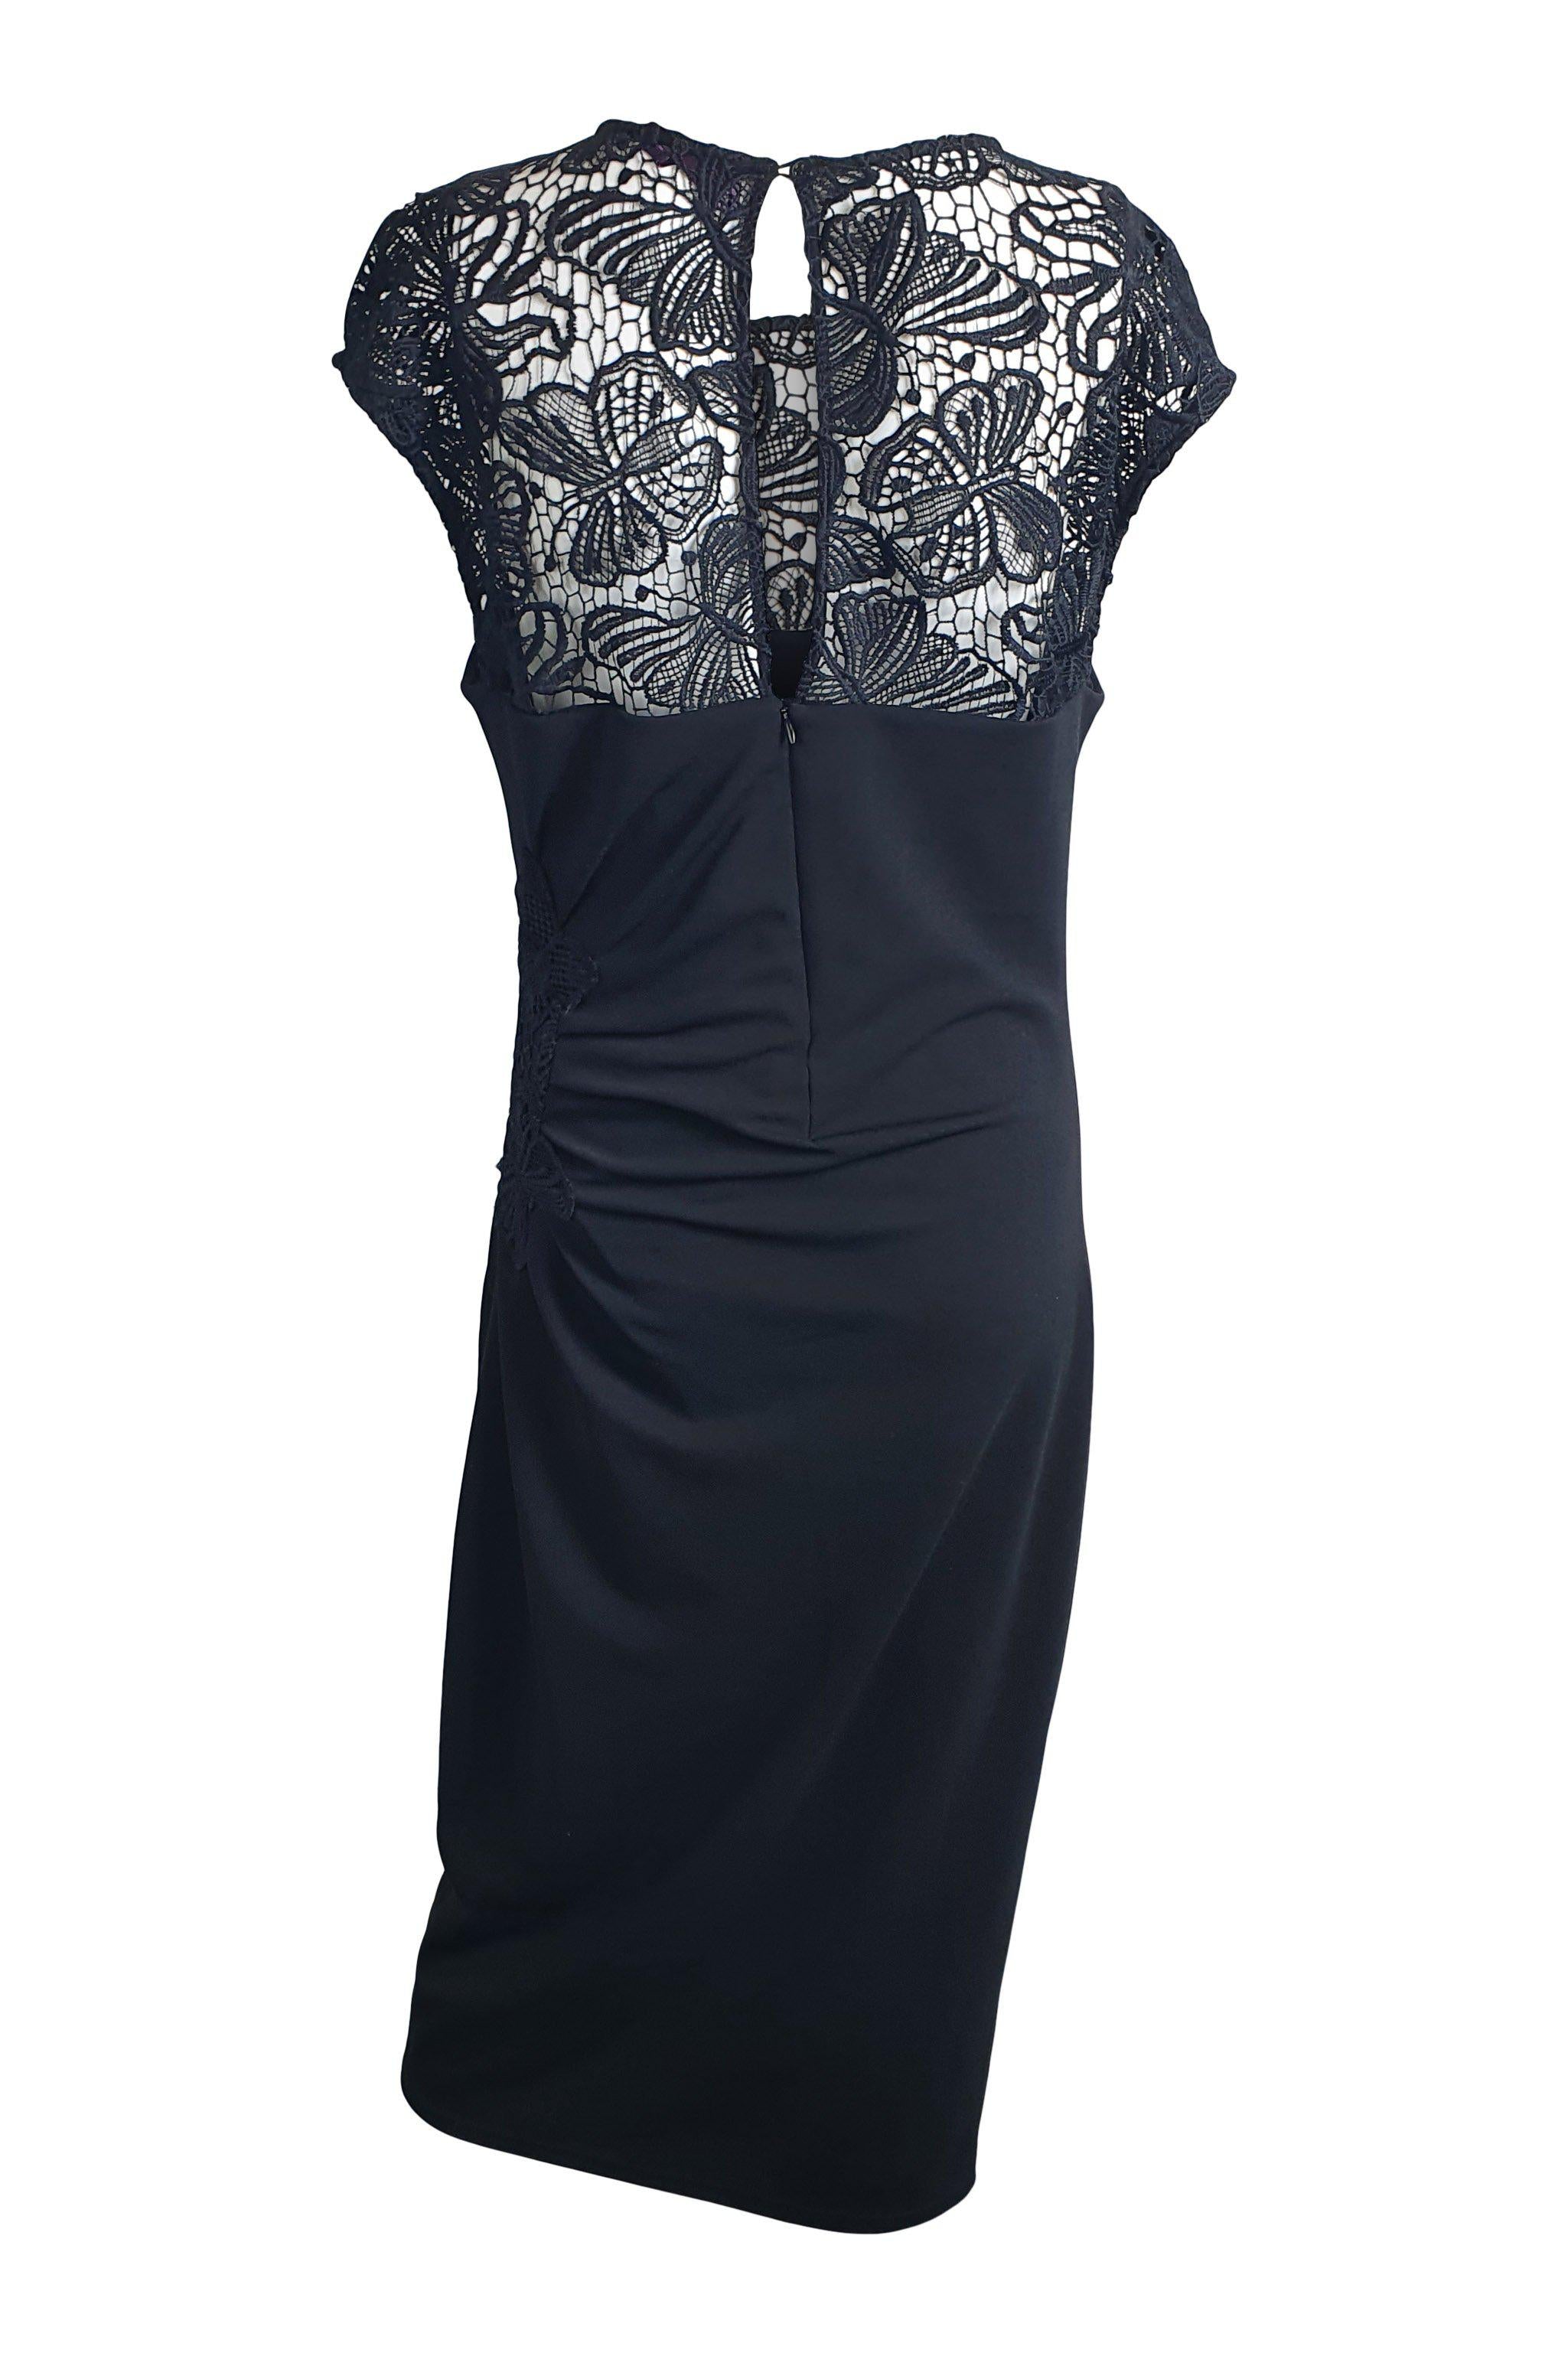 HALE BOB Black Lace Trim Short Sleeved Bodycon Dress (L) – The Freperie